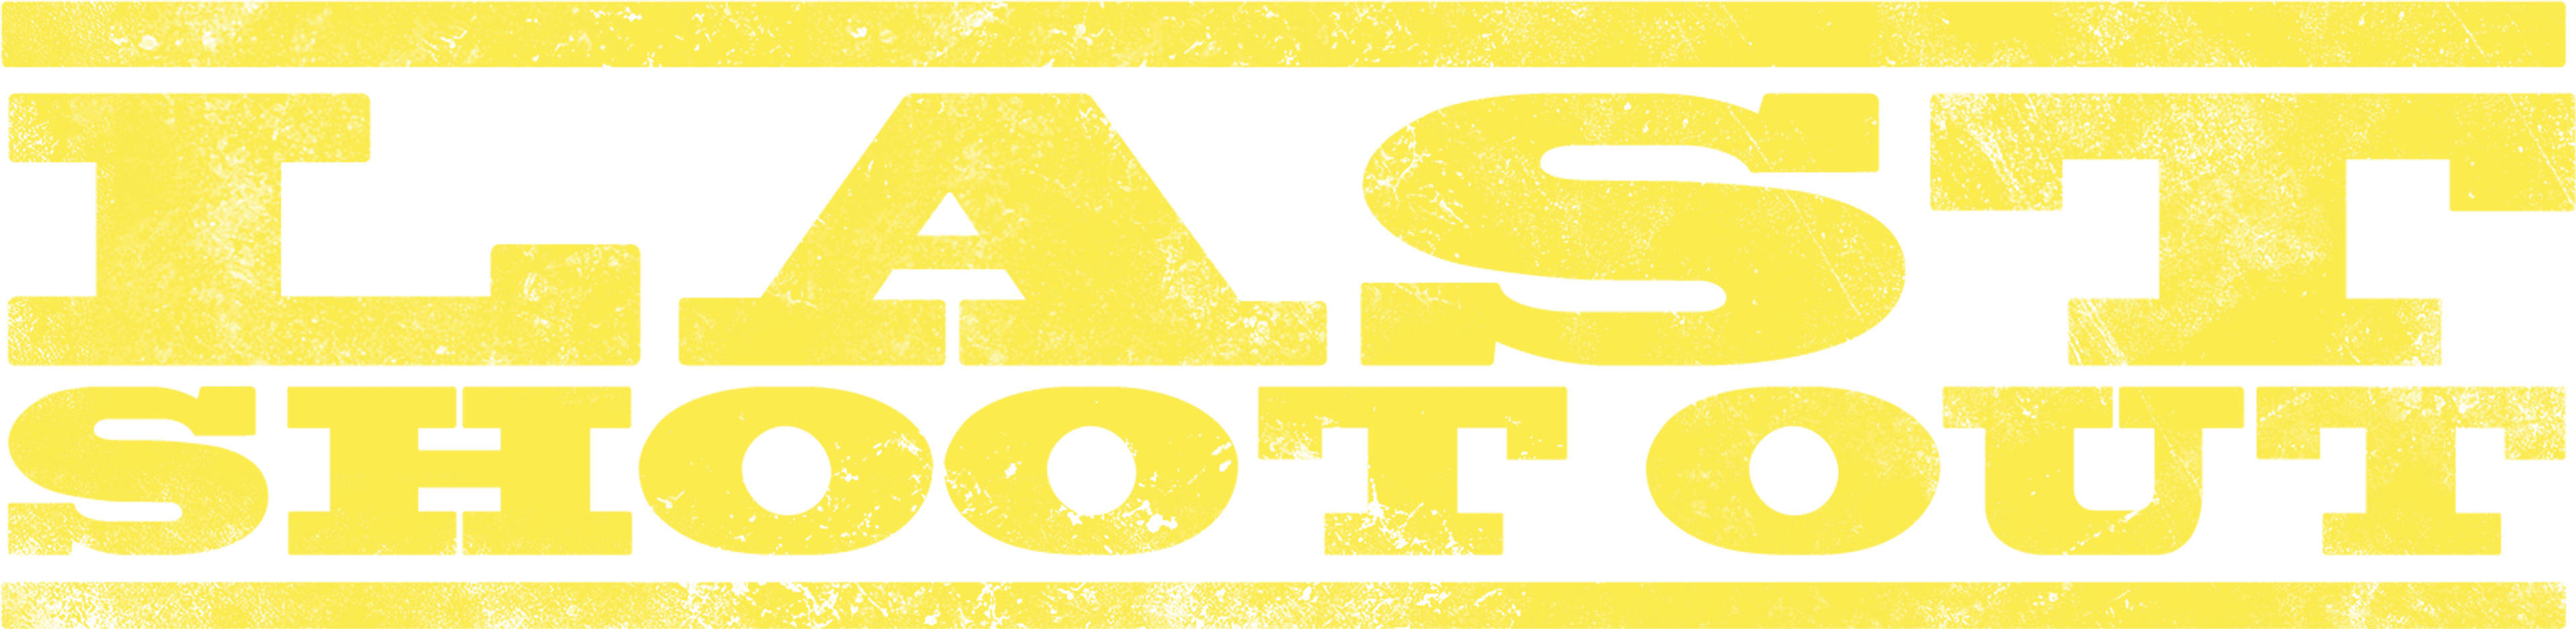 Last Shoot Out logo